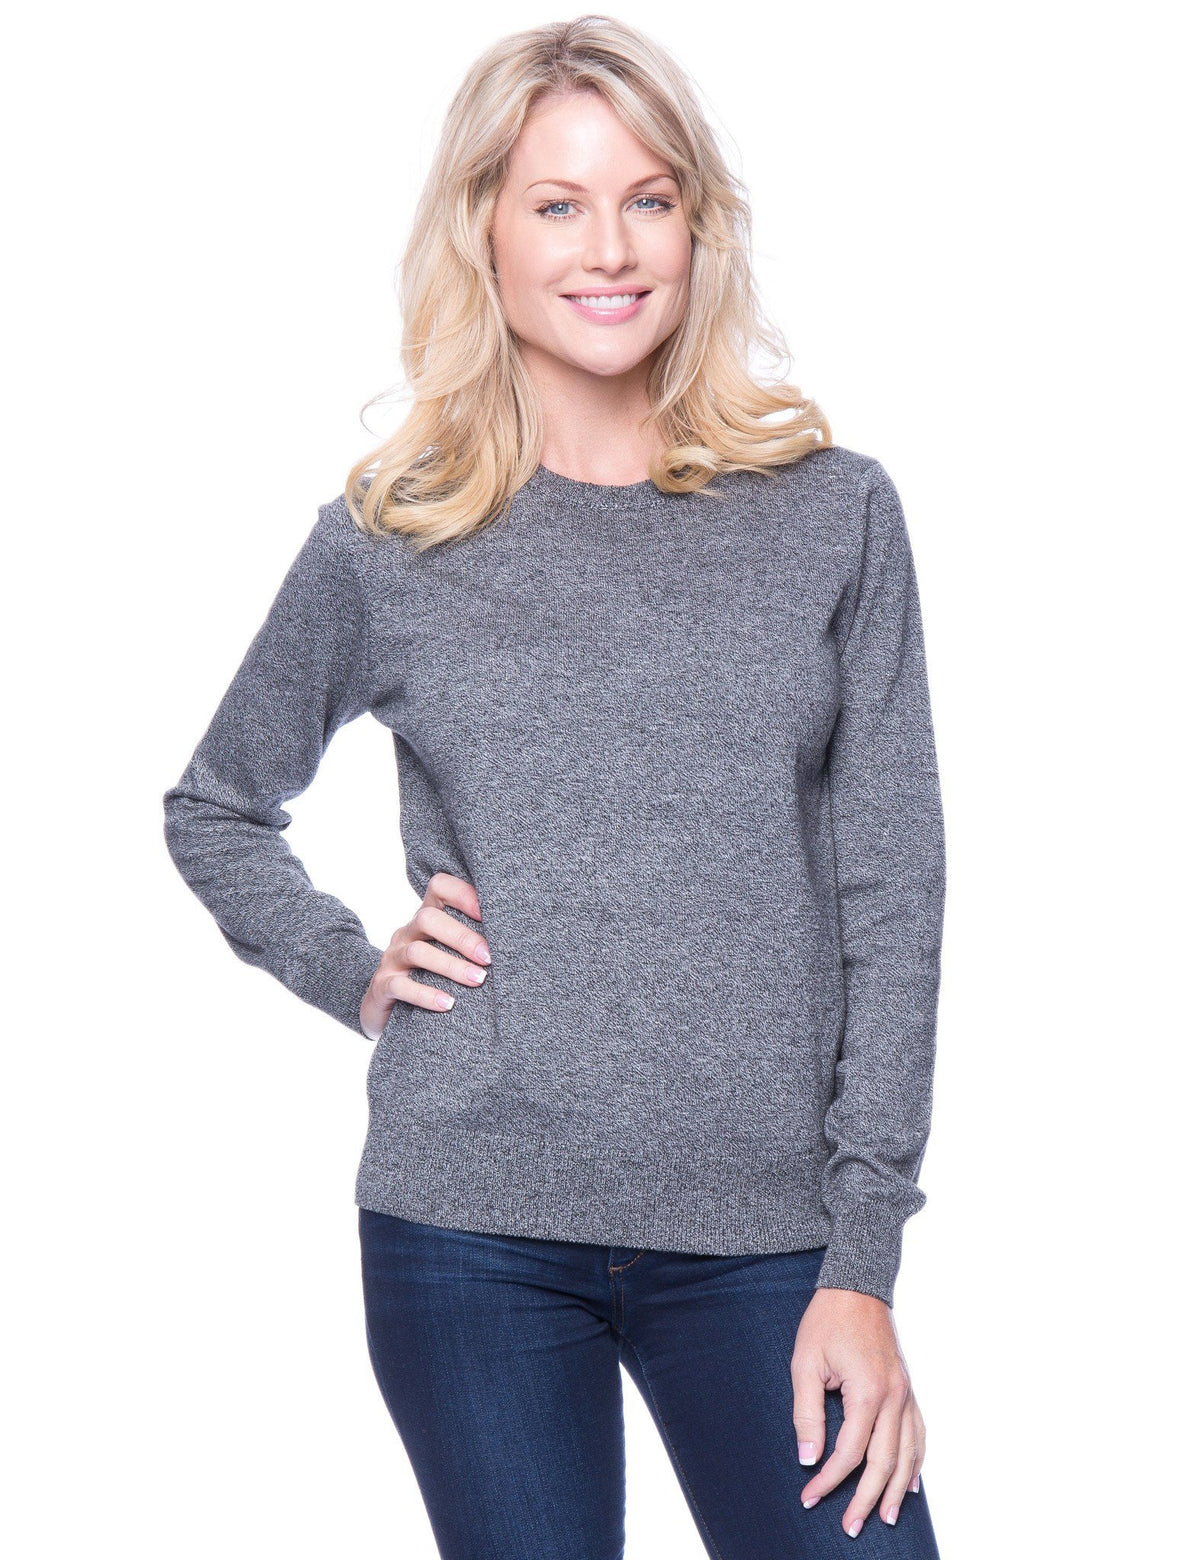 Women's Premium Cotton Crew Neck Sweater - Marl Black/White